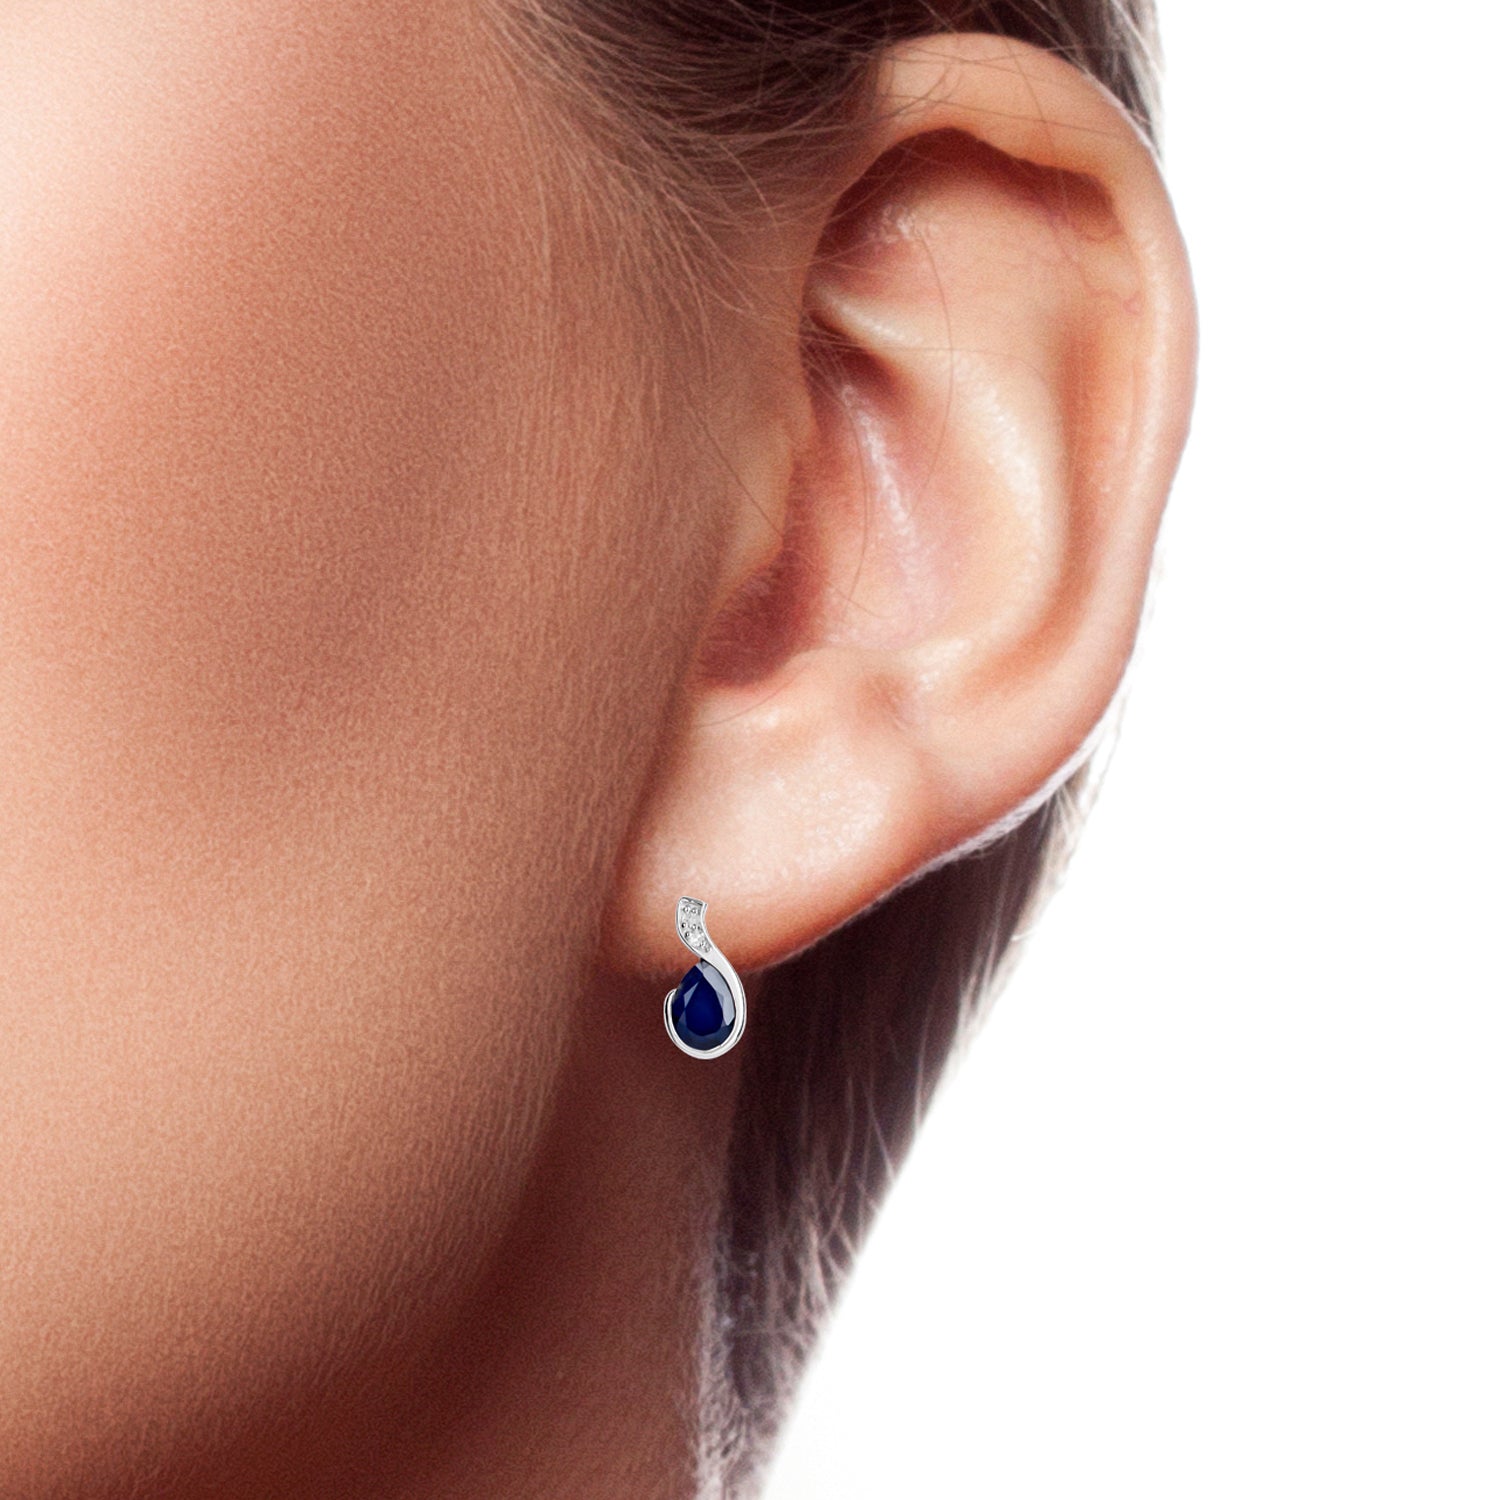 10k White Gold Genuine Pear-Shape Sapphire and Diamond Earrings